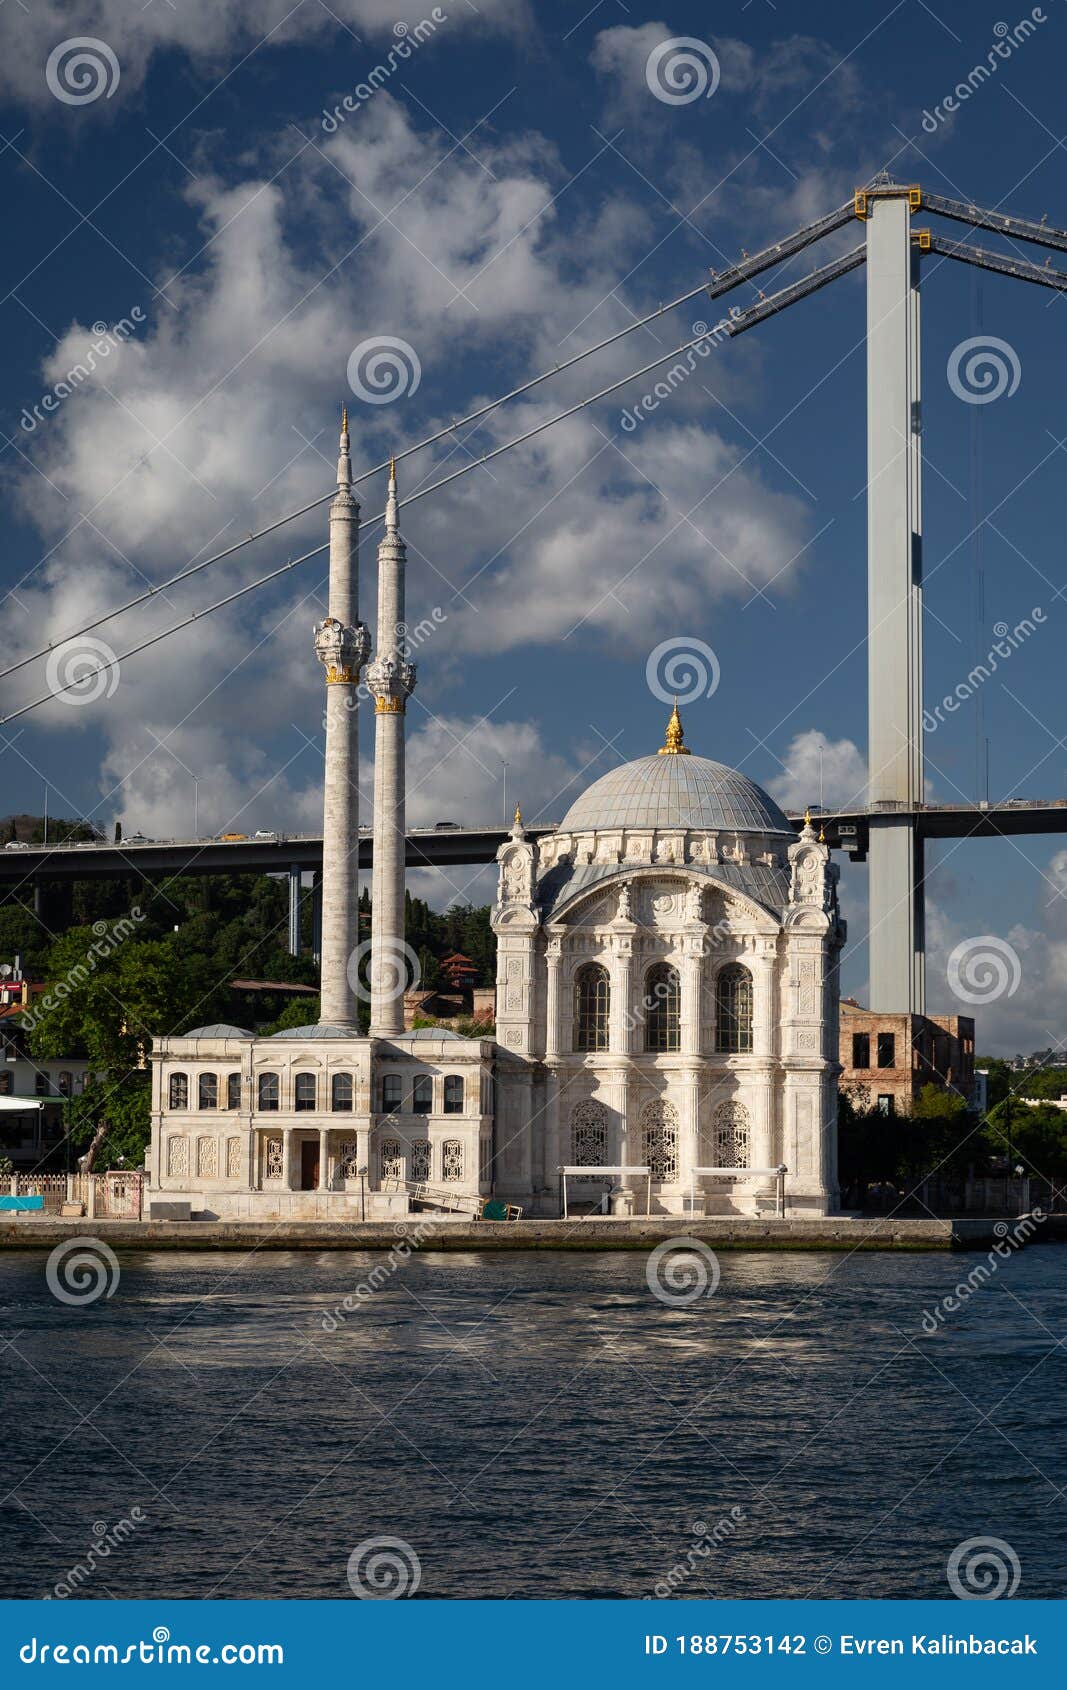 buyuk mecidiye mosque in istanbul, turkey